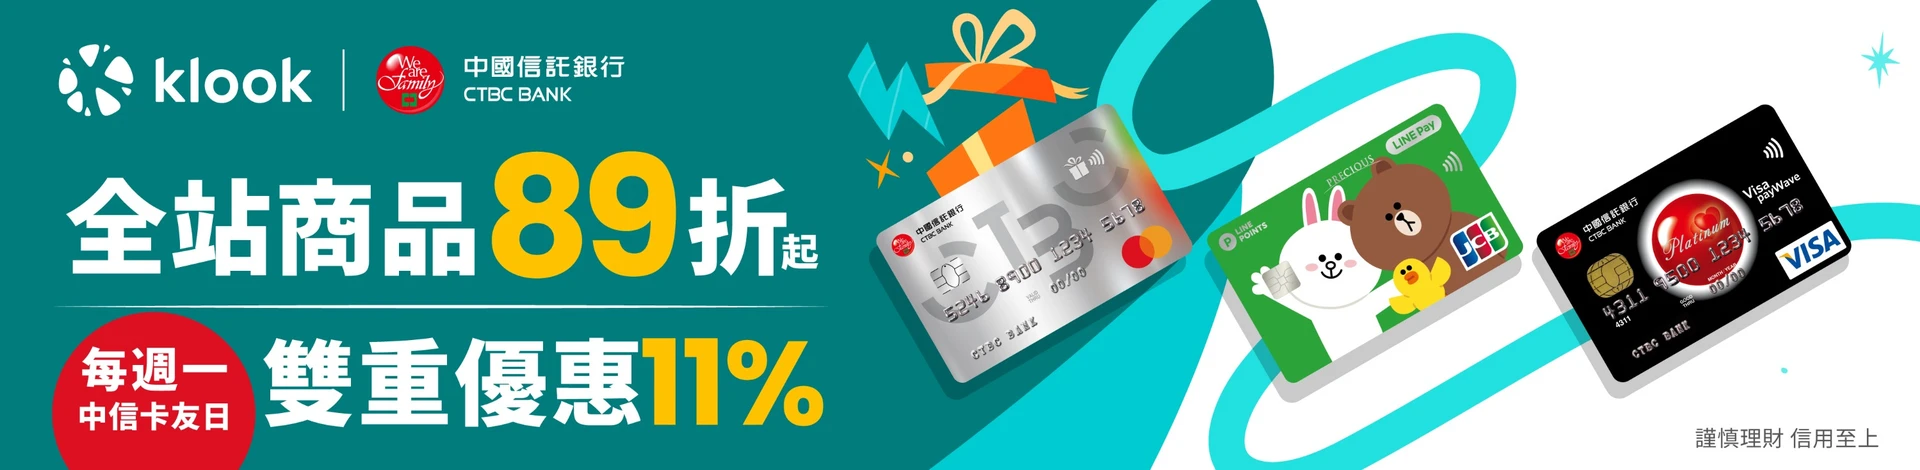 Klook信用卡優惠中國信託